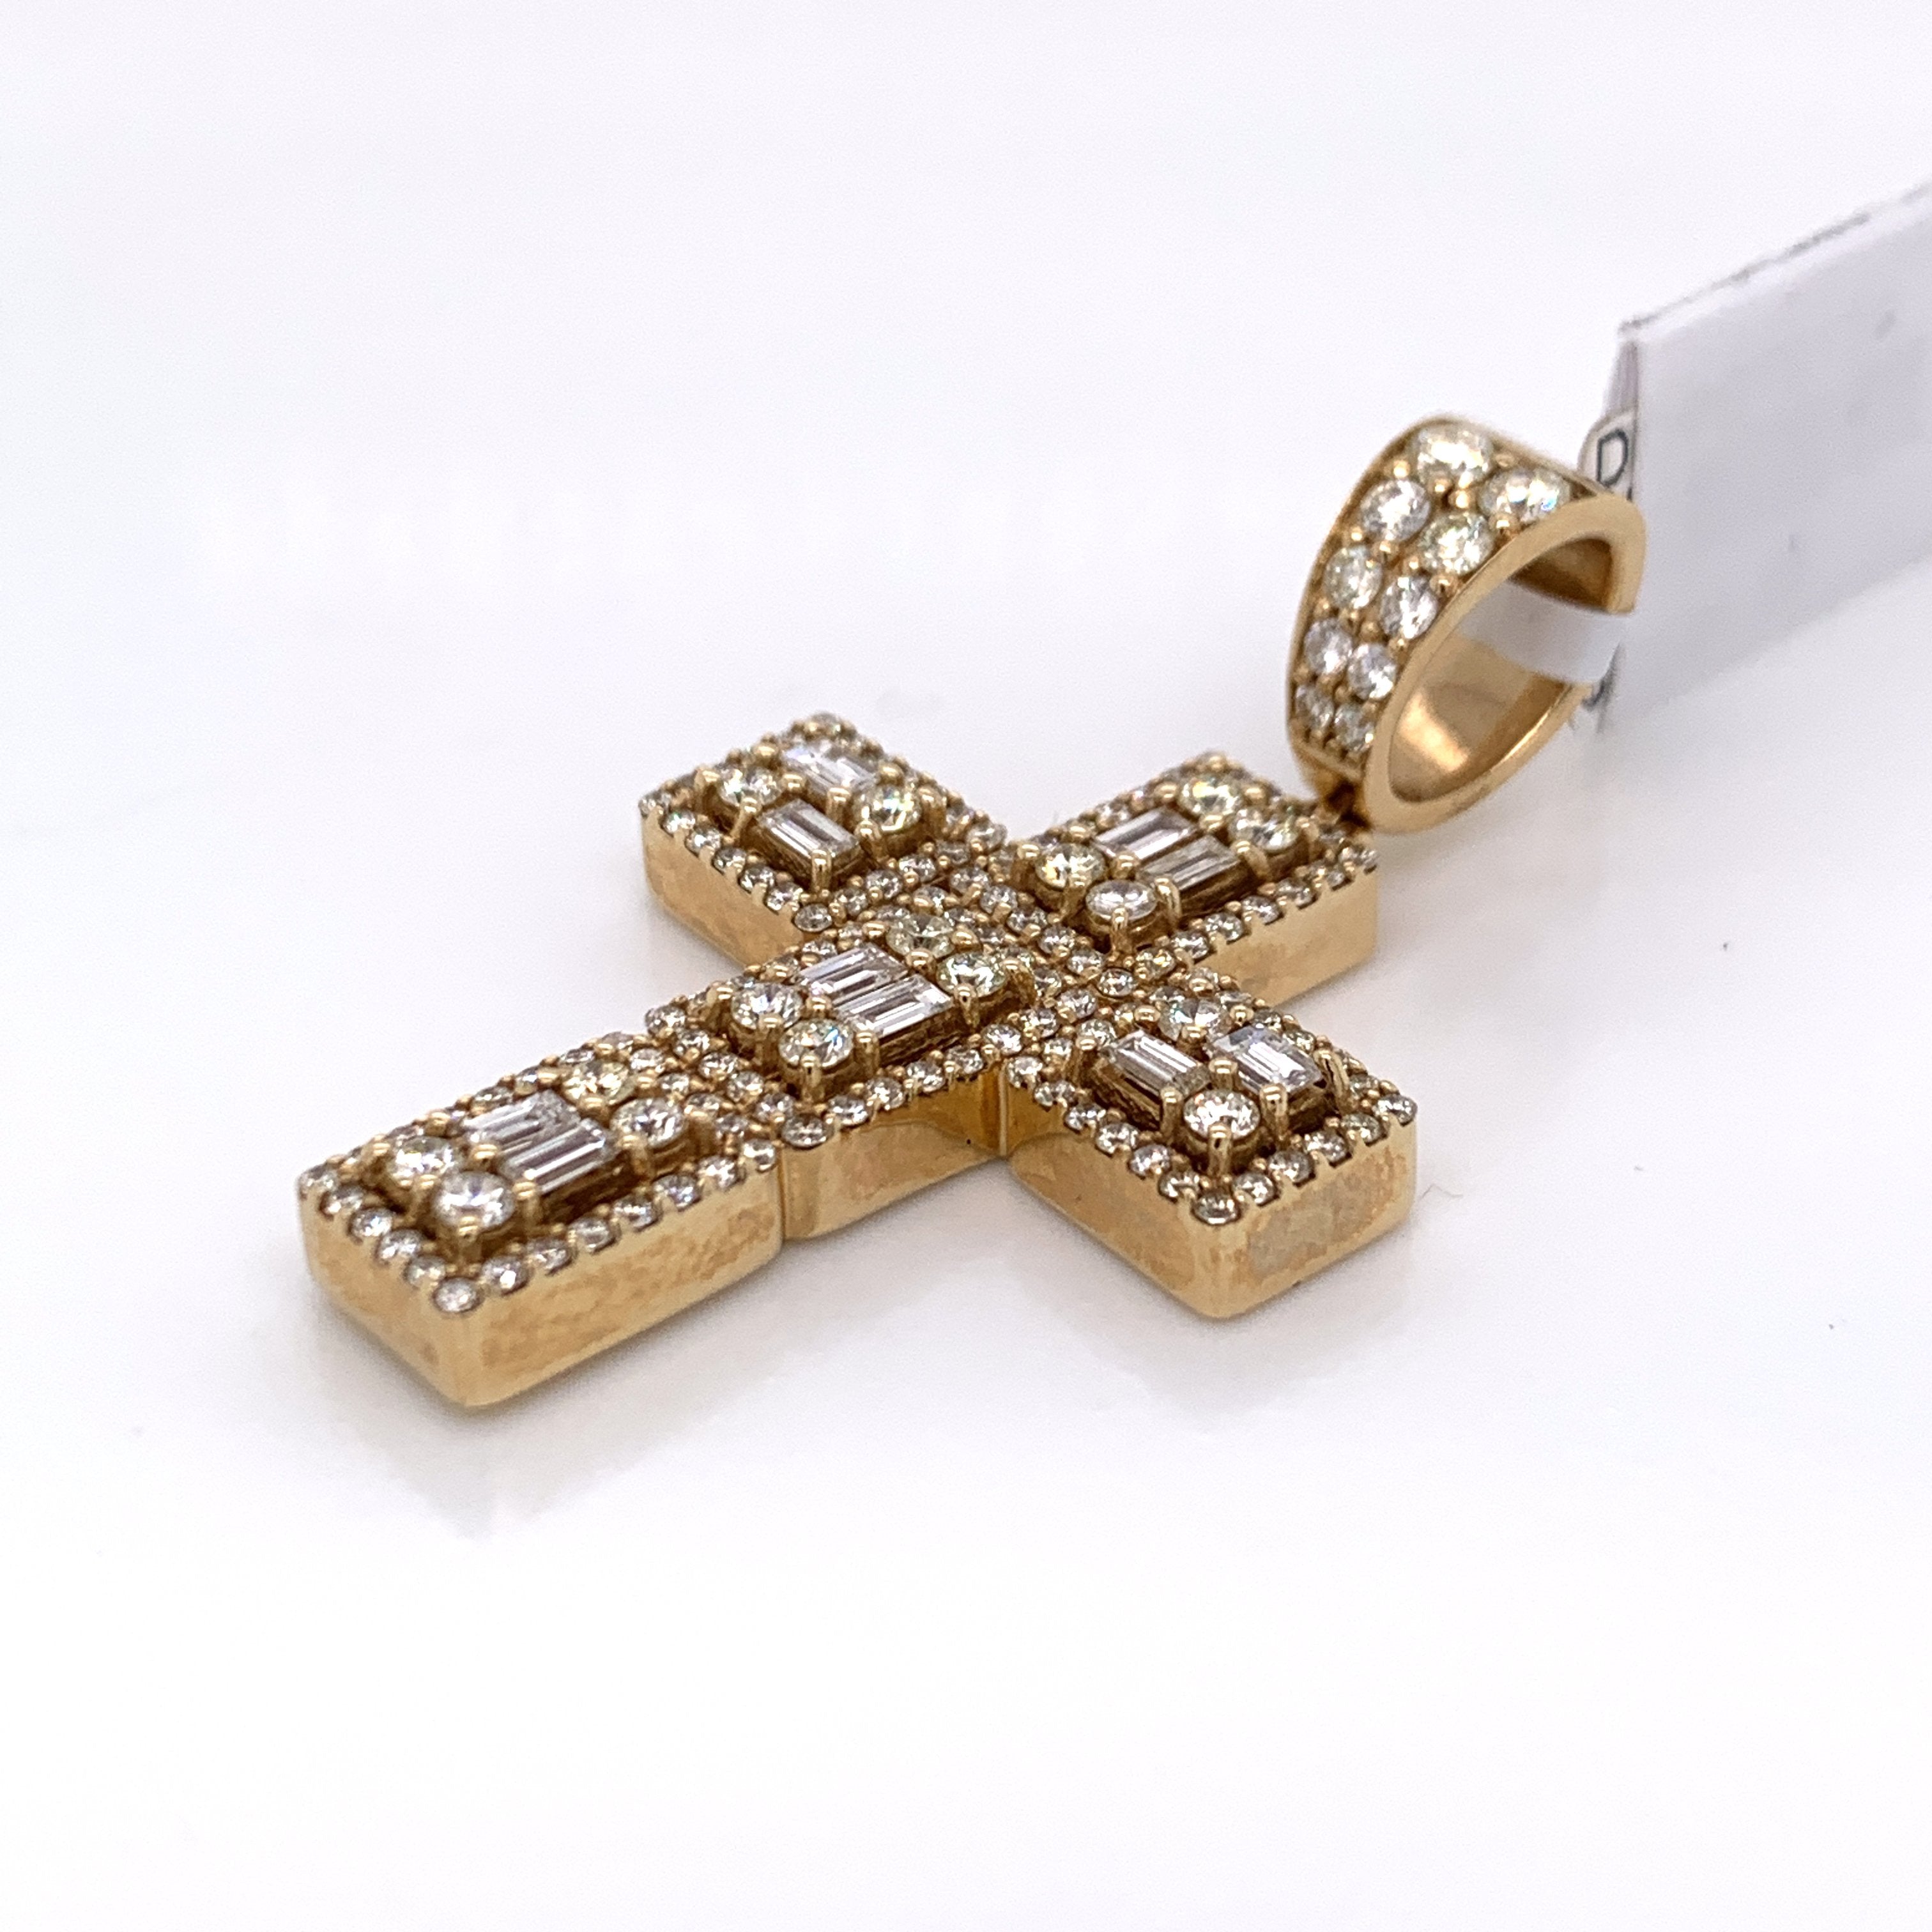 2.50CT Diamond Baguette Cross Pendant in 10K Gold - White Carat Diamonds 